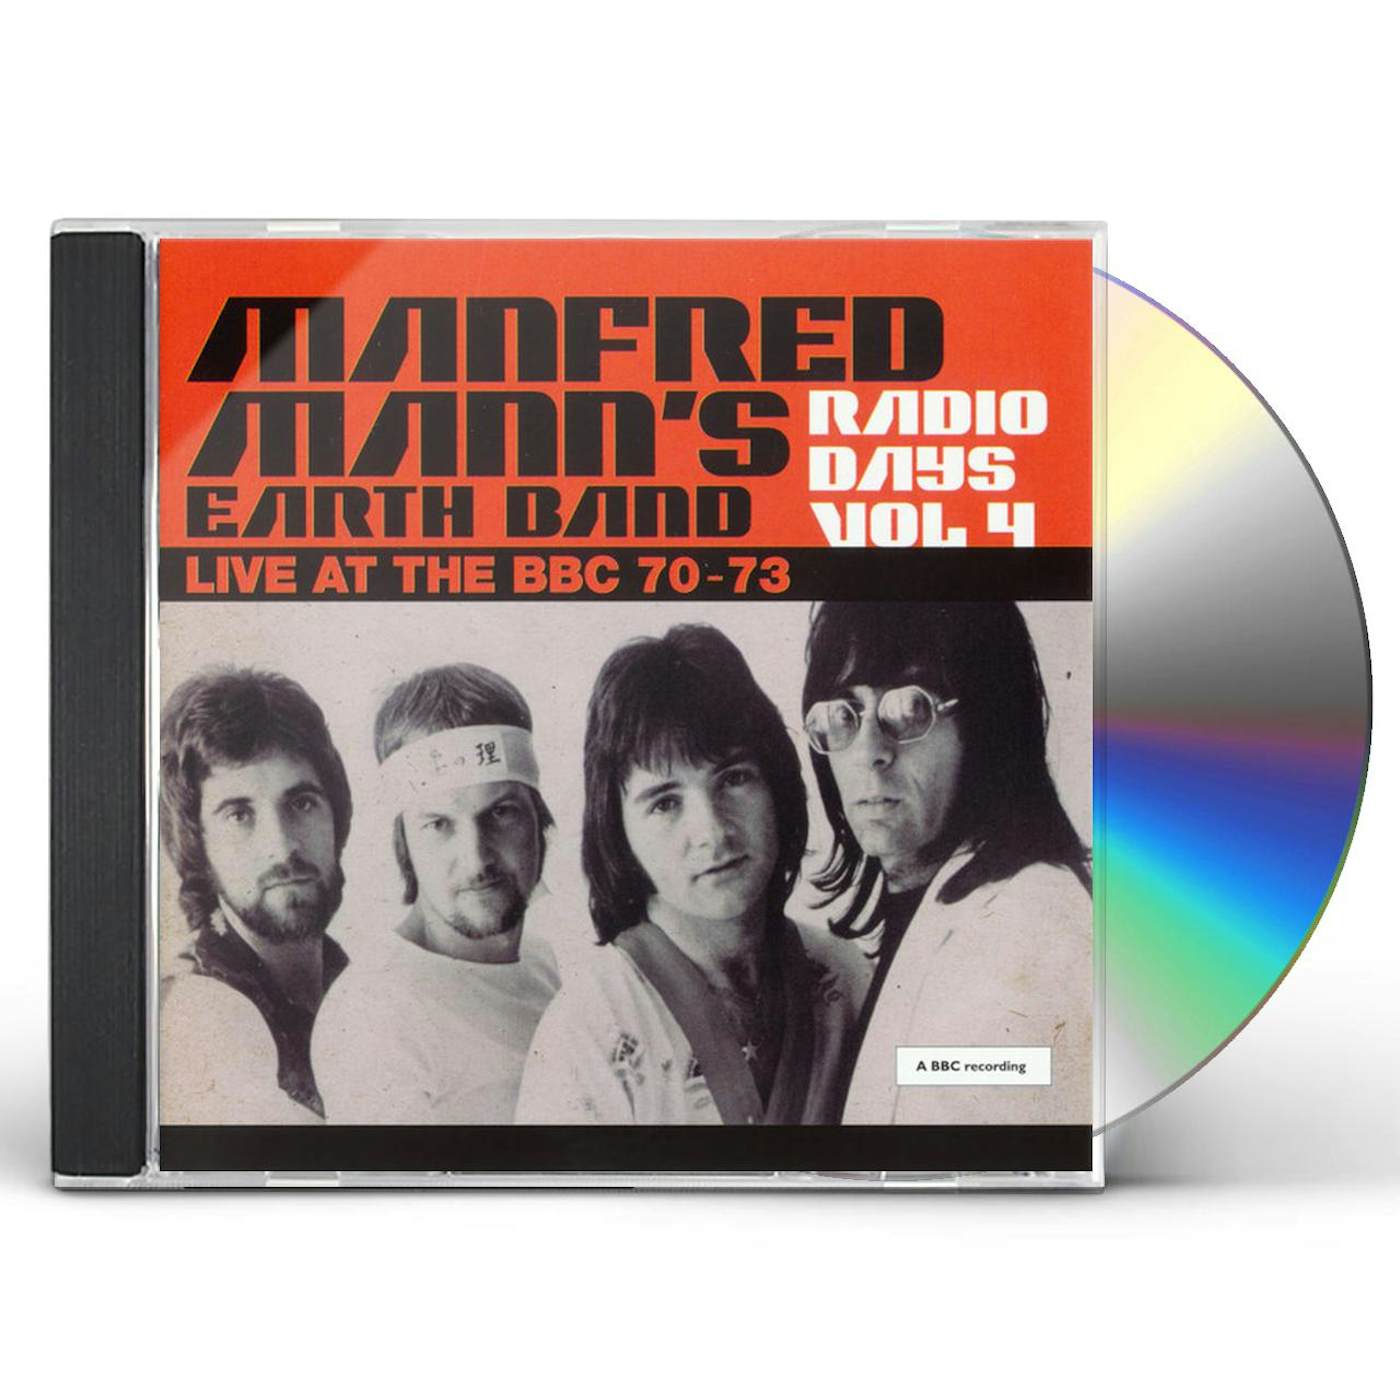 Manfred Mann's Earth Band RADIO DAYS VOL.4 CD